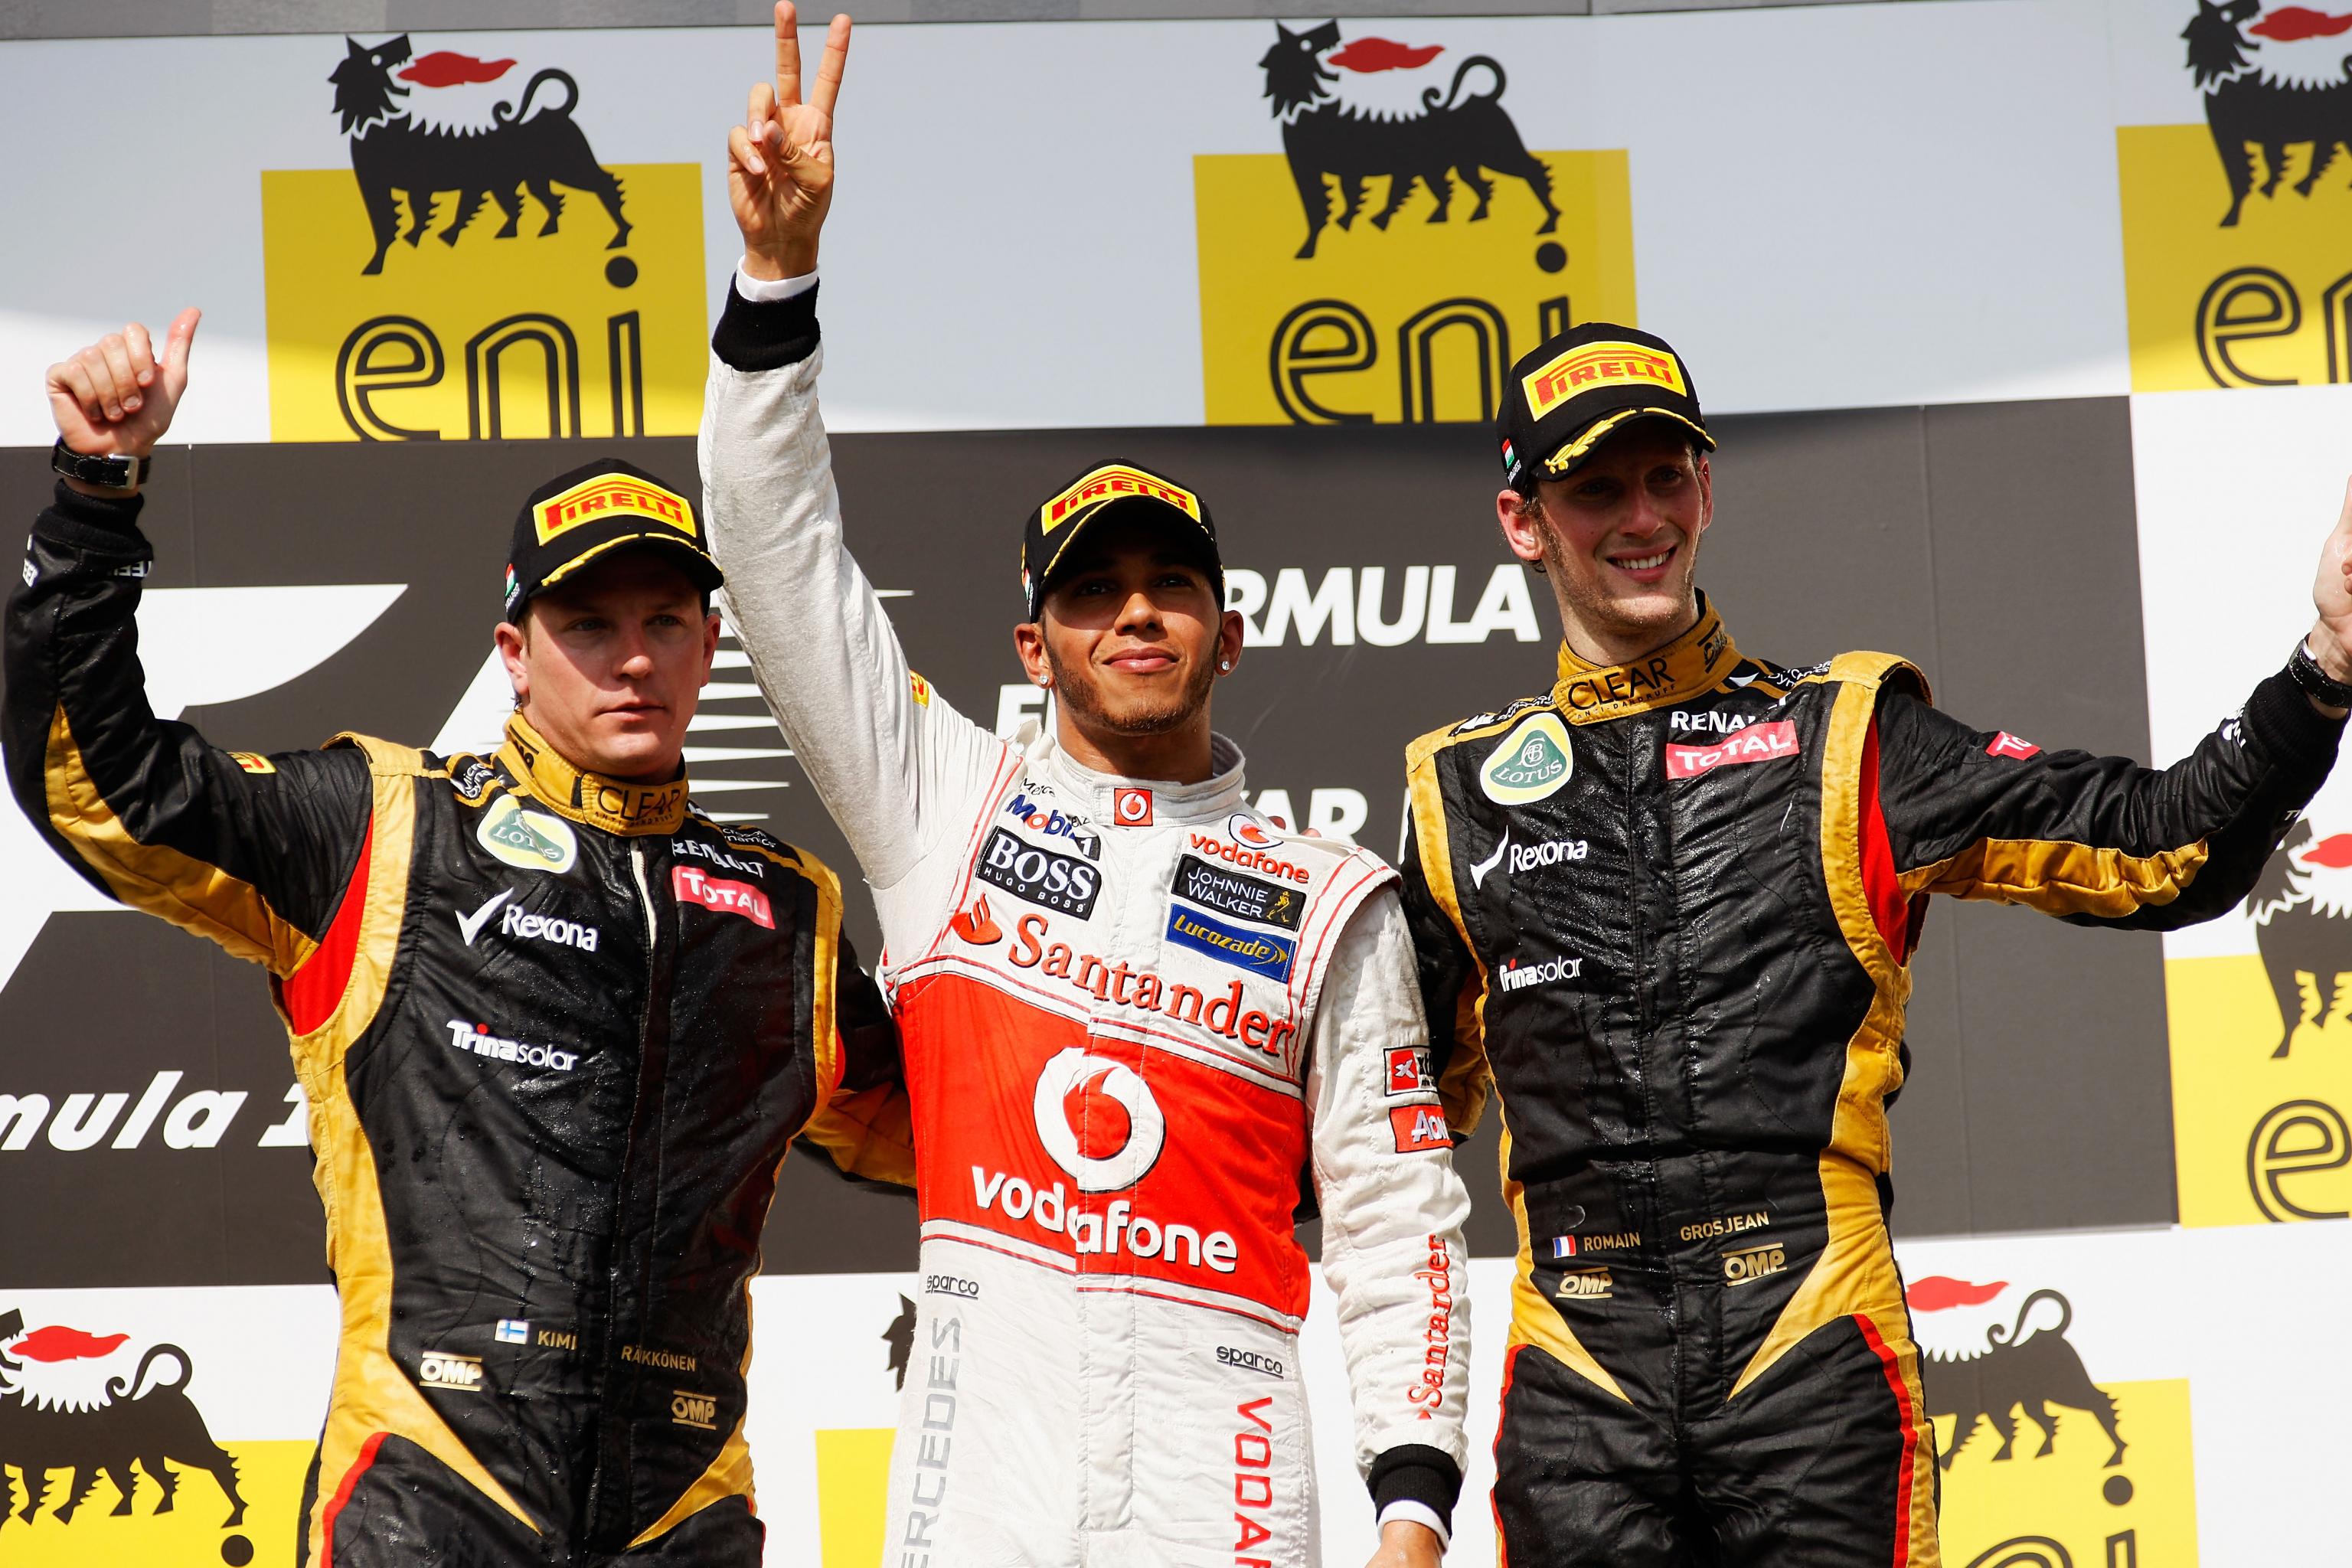 2012 Hungarian Grand Prix: F1 Race Results, Winner & Podium